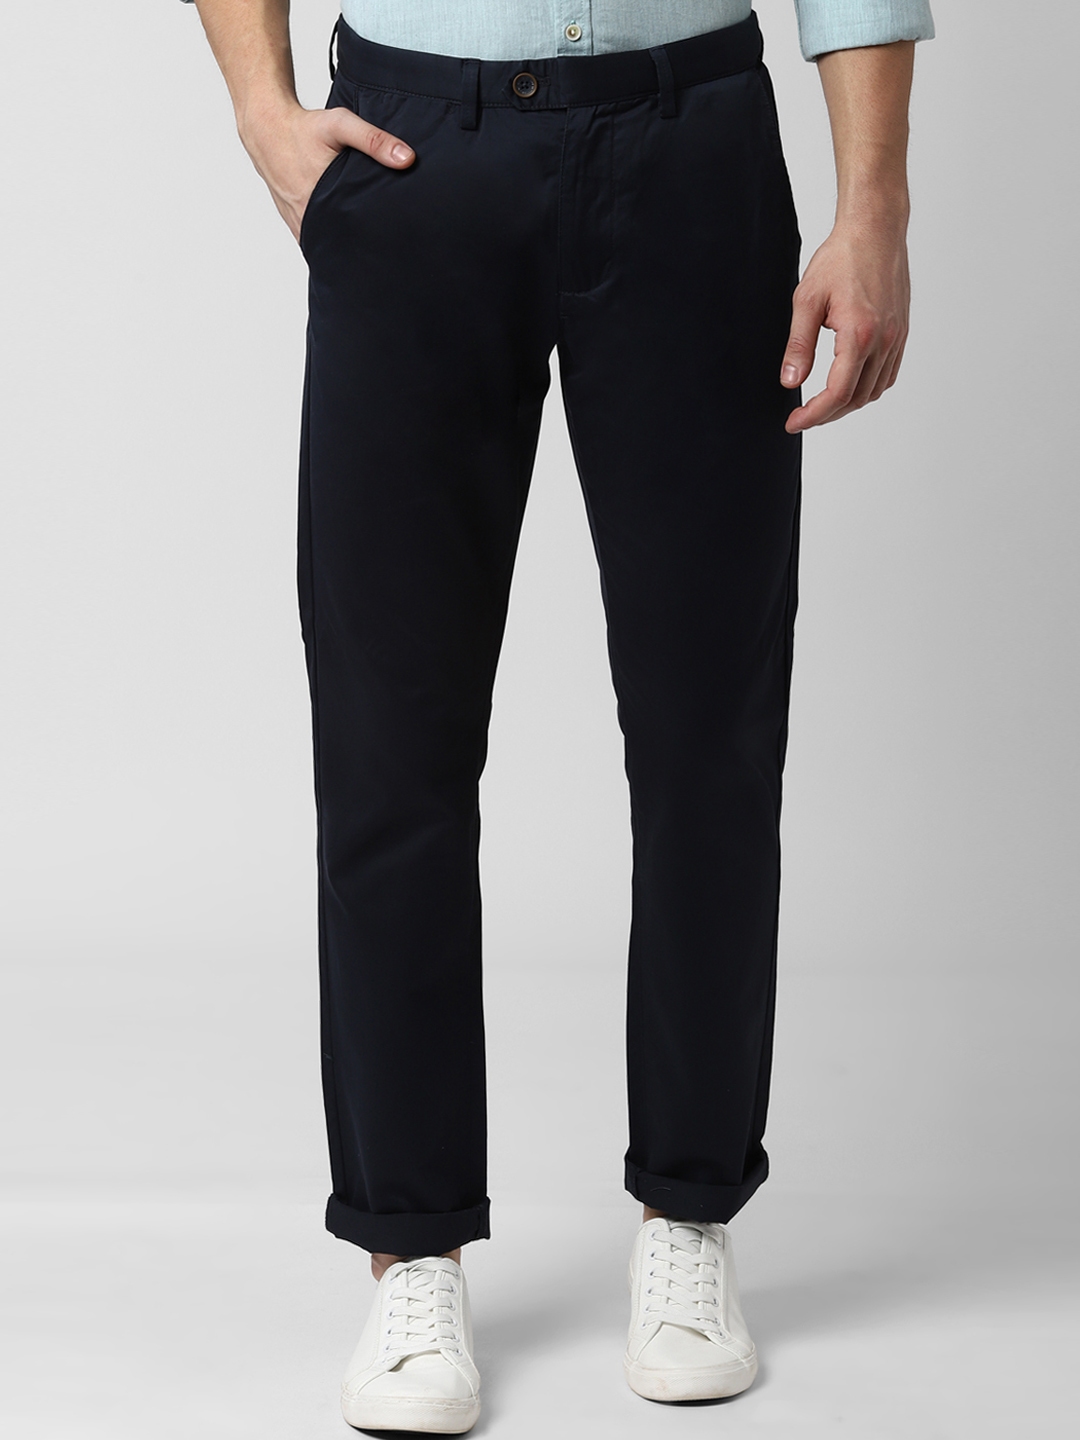 Buy Peter England Casuals Men Navy Blue Slim Fit Solid Regular Trousers ...